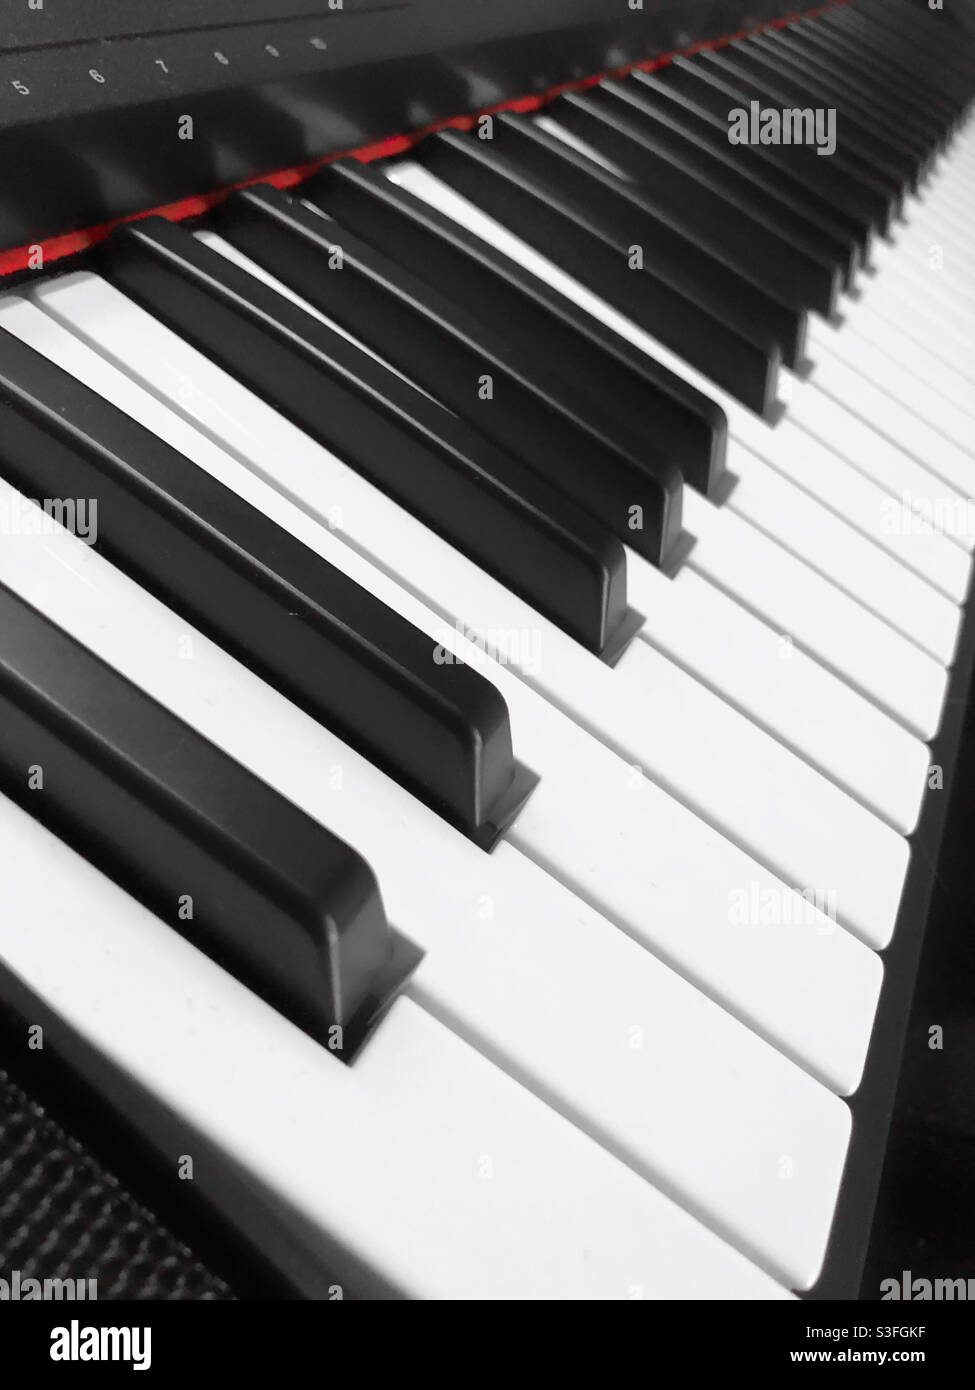 Close-up of black and white keys on Yamaha Piaggero NP-12 piano focused keyboard Stock Photo